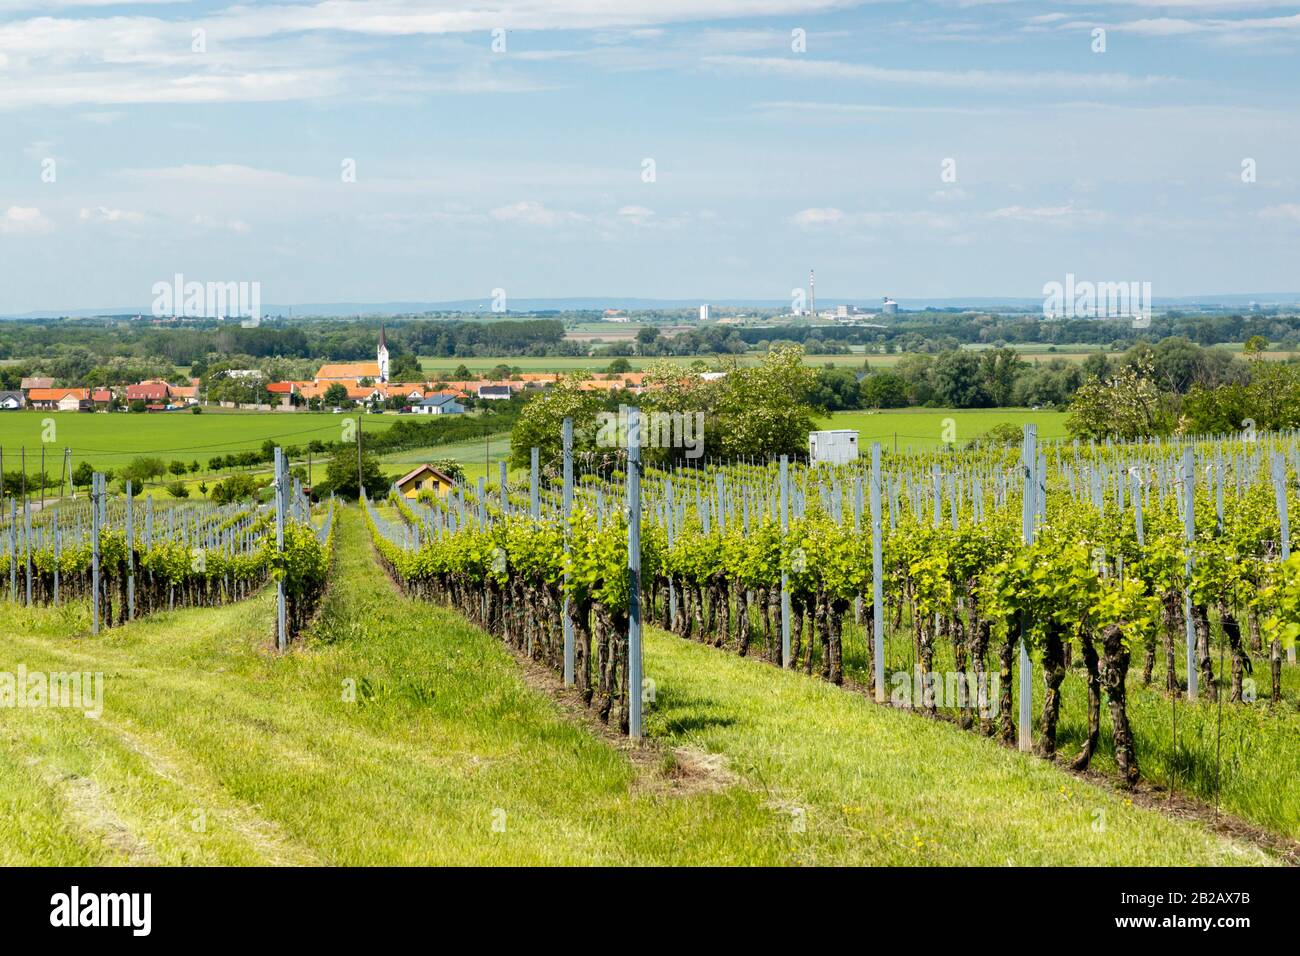 Vineyards, Palava region, South Moravia, Czech Republic. Stock Photo